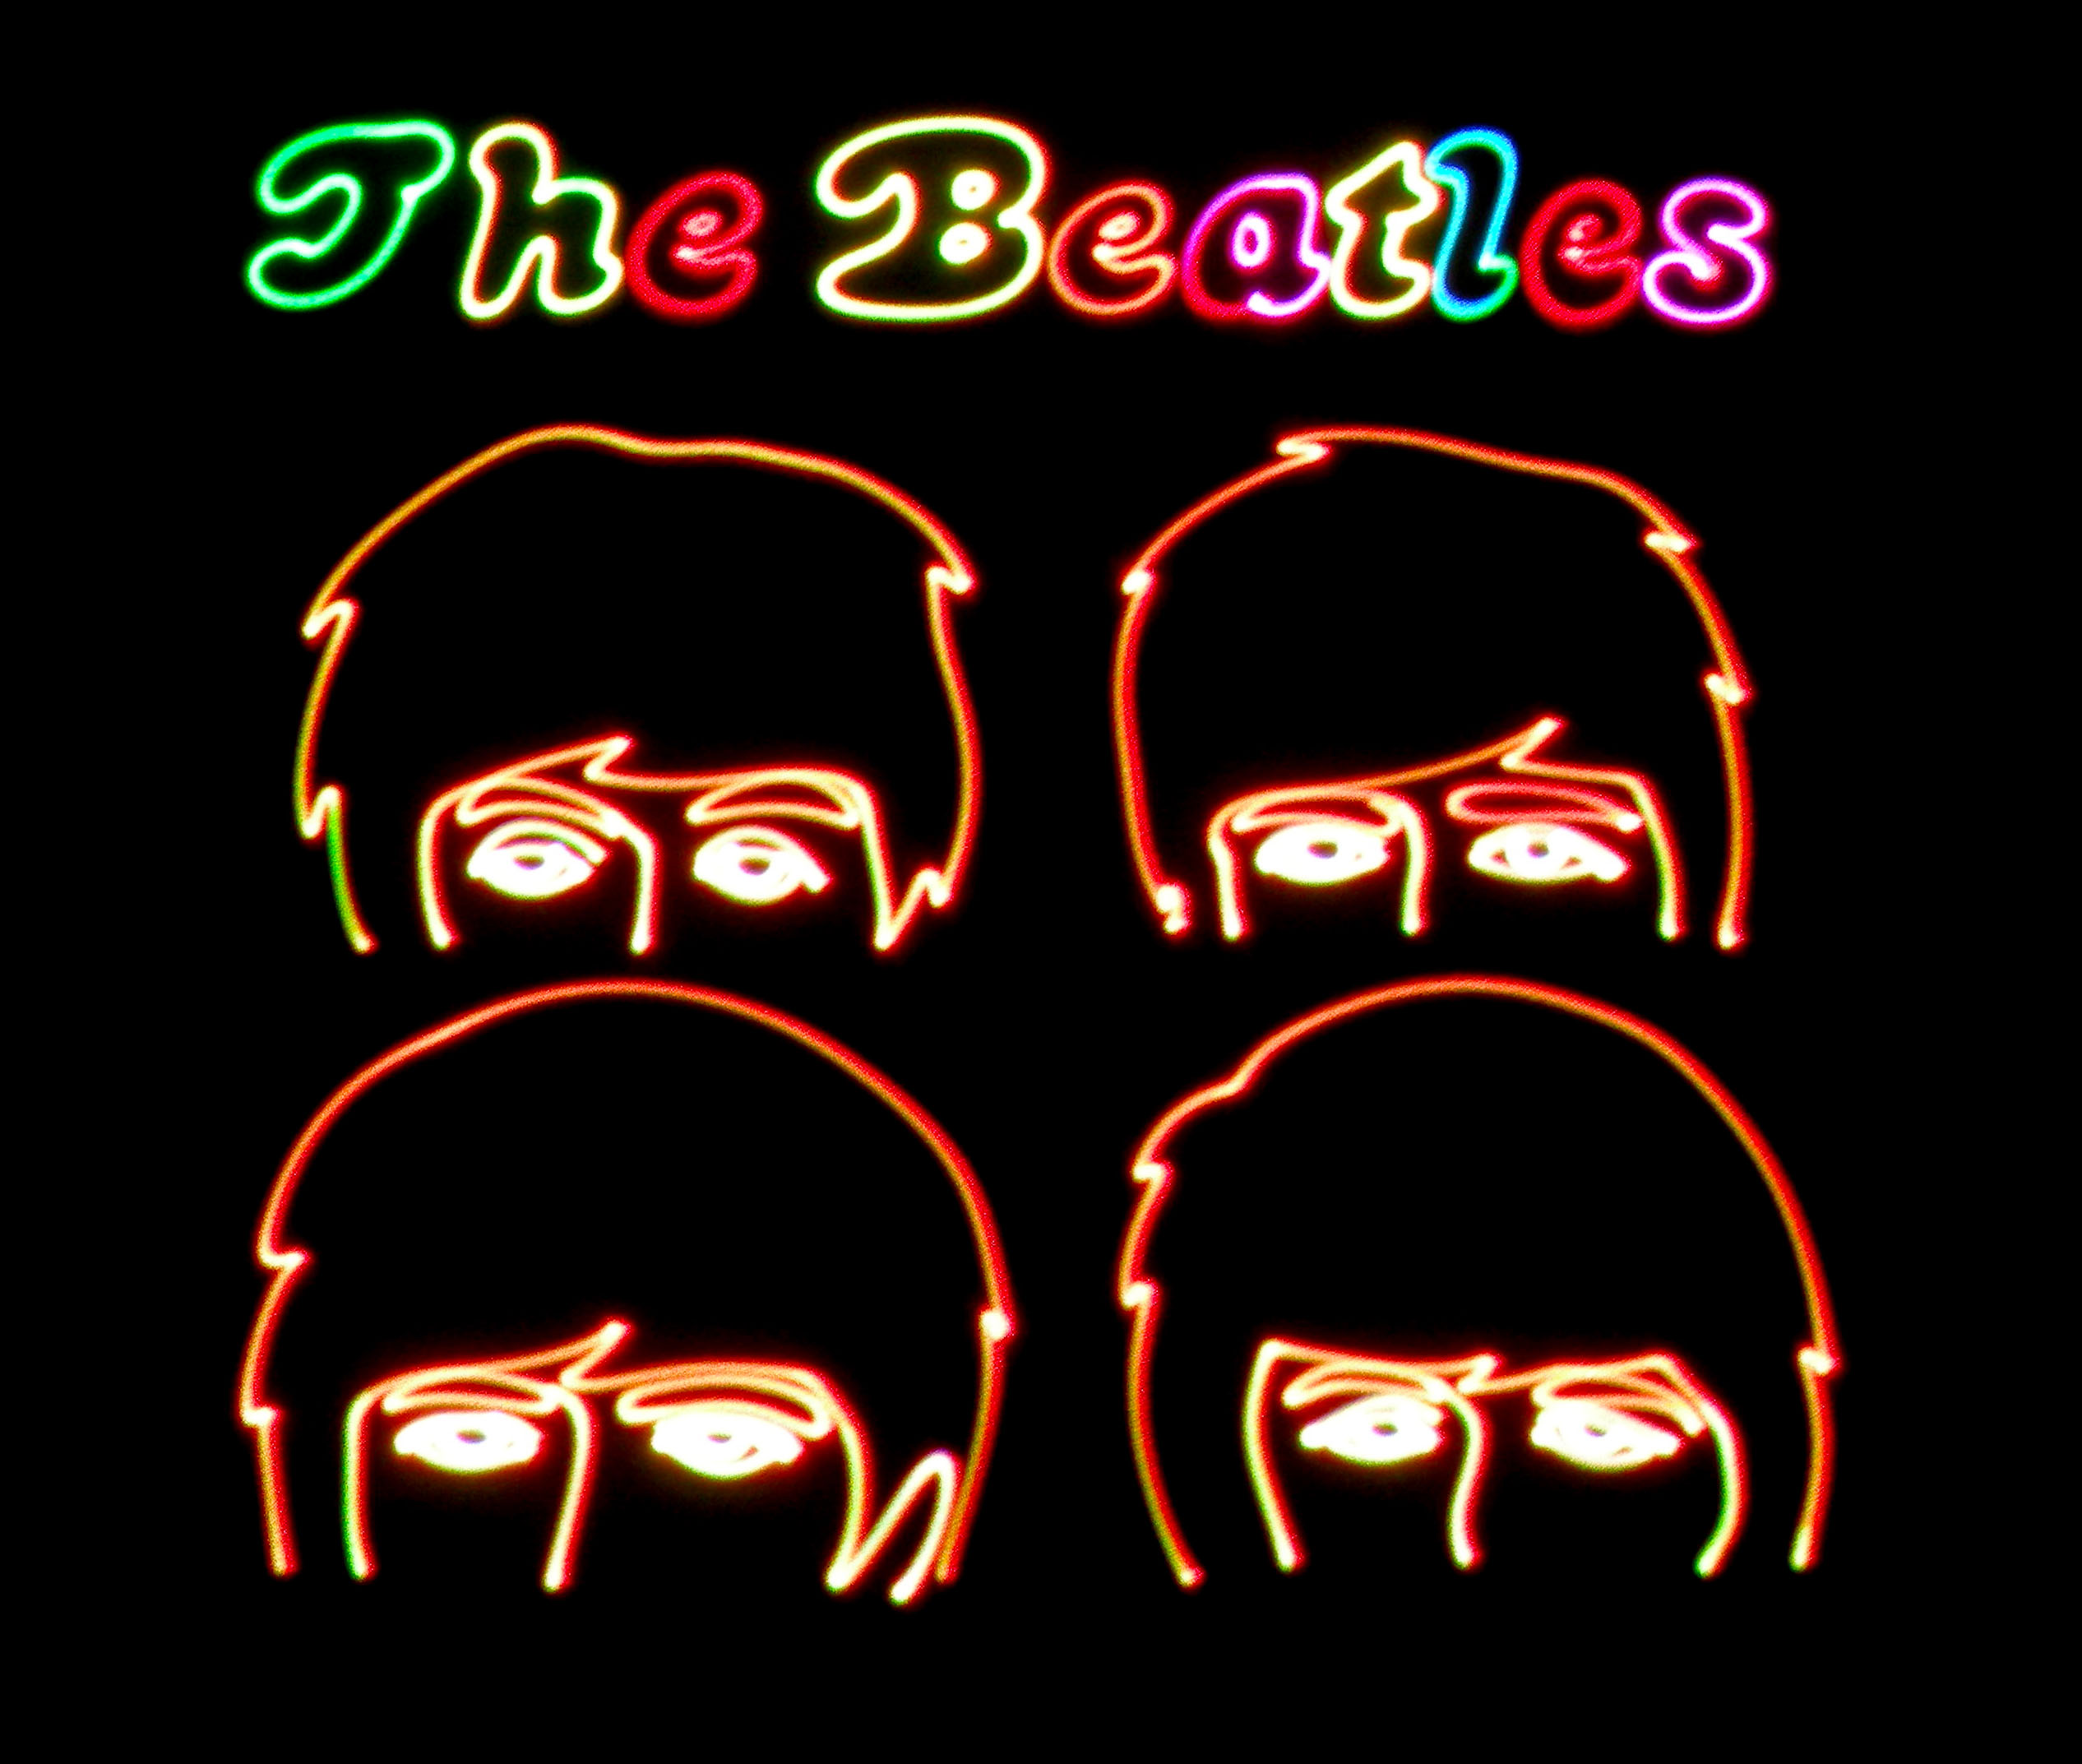 Laser Beatles logo